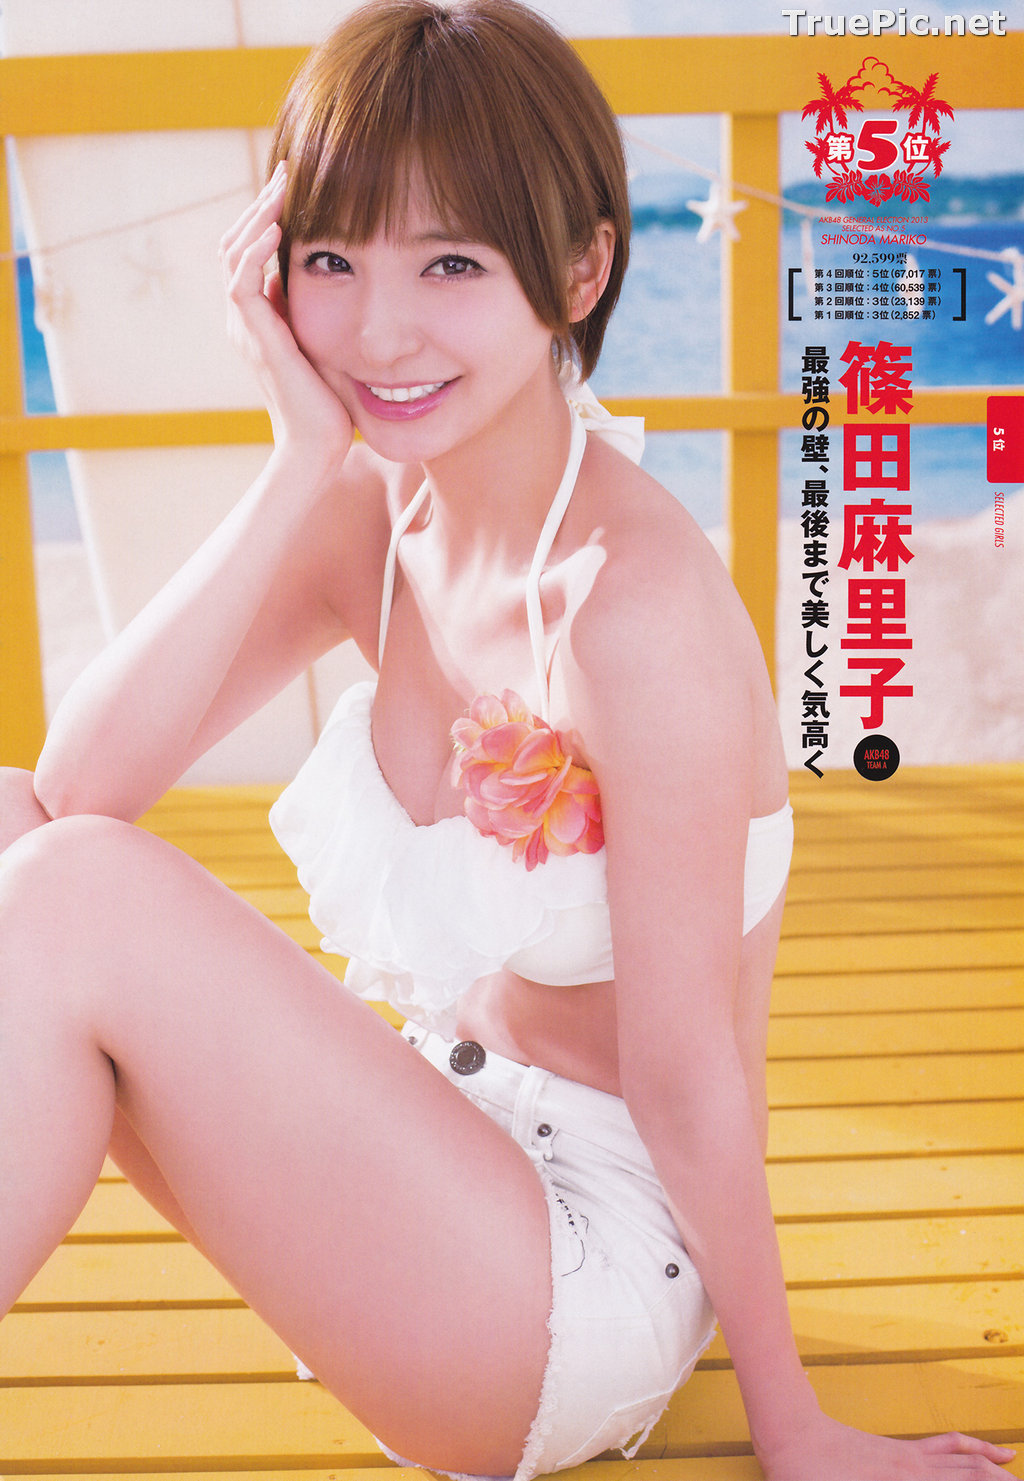 Image AKB48 General Election! Swimsuit Surprise Announcement 2013 - TruePic.net - Picture-23